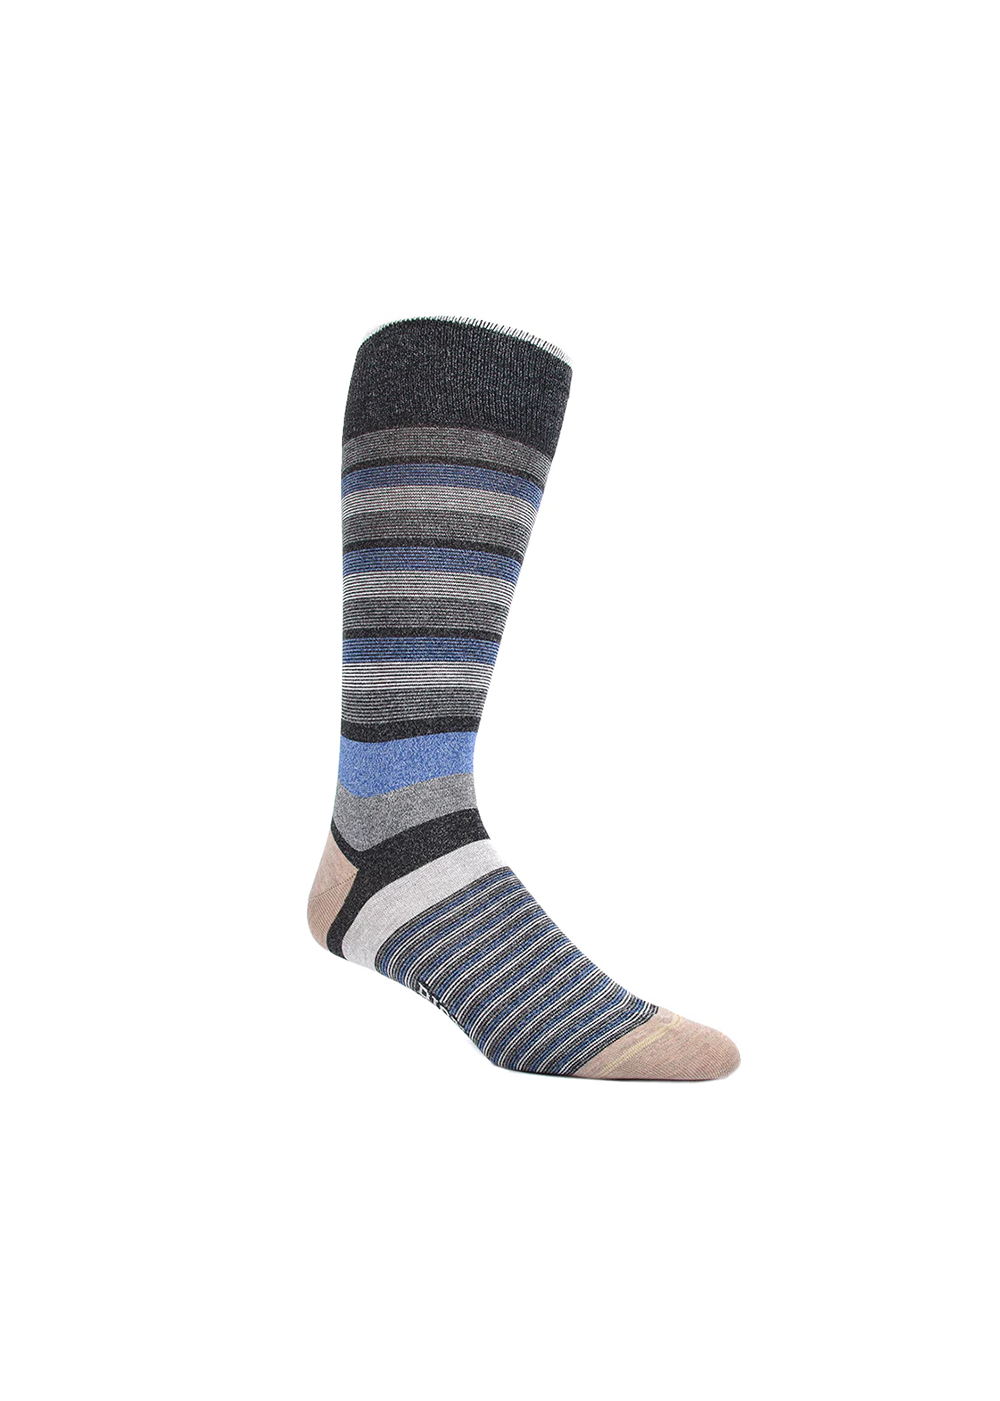 Dion Multi Stripe Cotton Socks - Black/Grey - Dion Canada - Danali